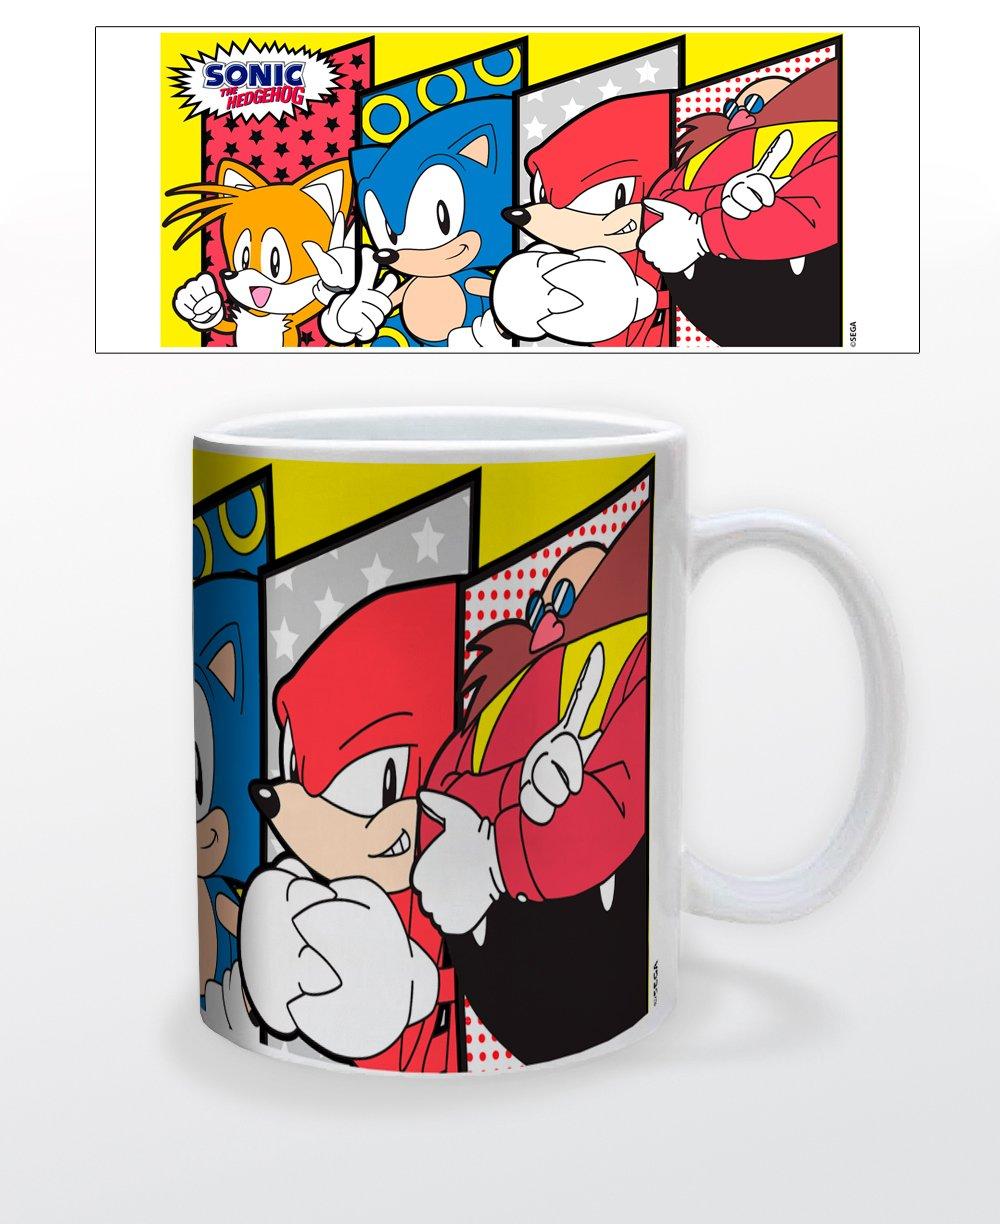 https://media.gamestop.com/i/gamestop/20004553/Sonic-the-Hedgehog---Sonic-Tails-Knuckles-and-Egghead-11oz-Mug?$pdp$